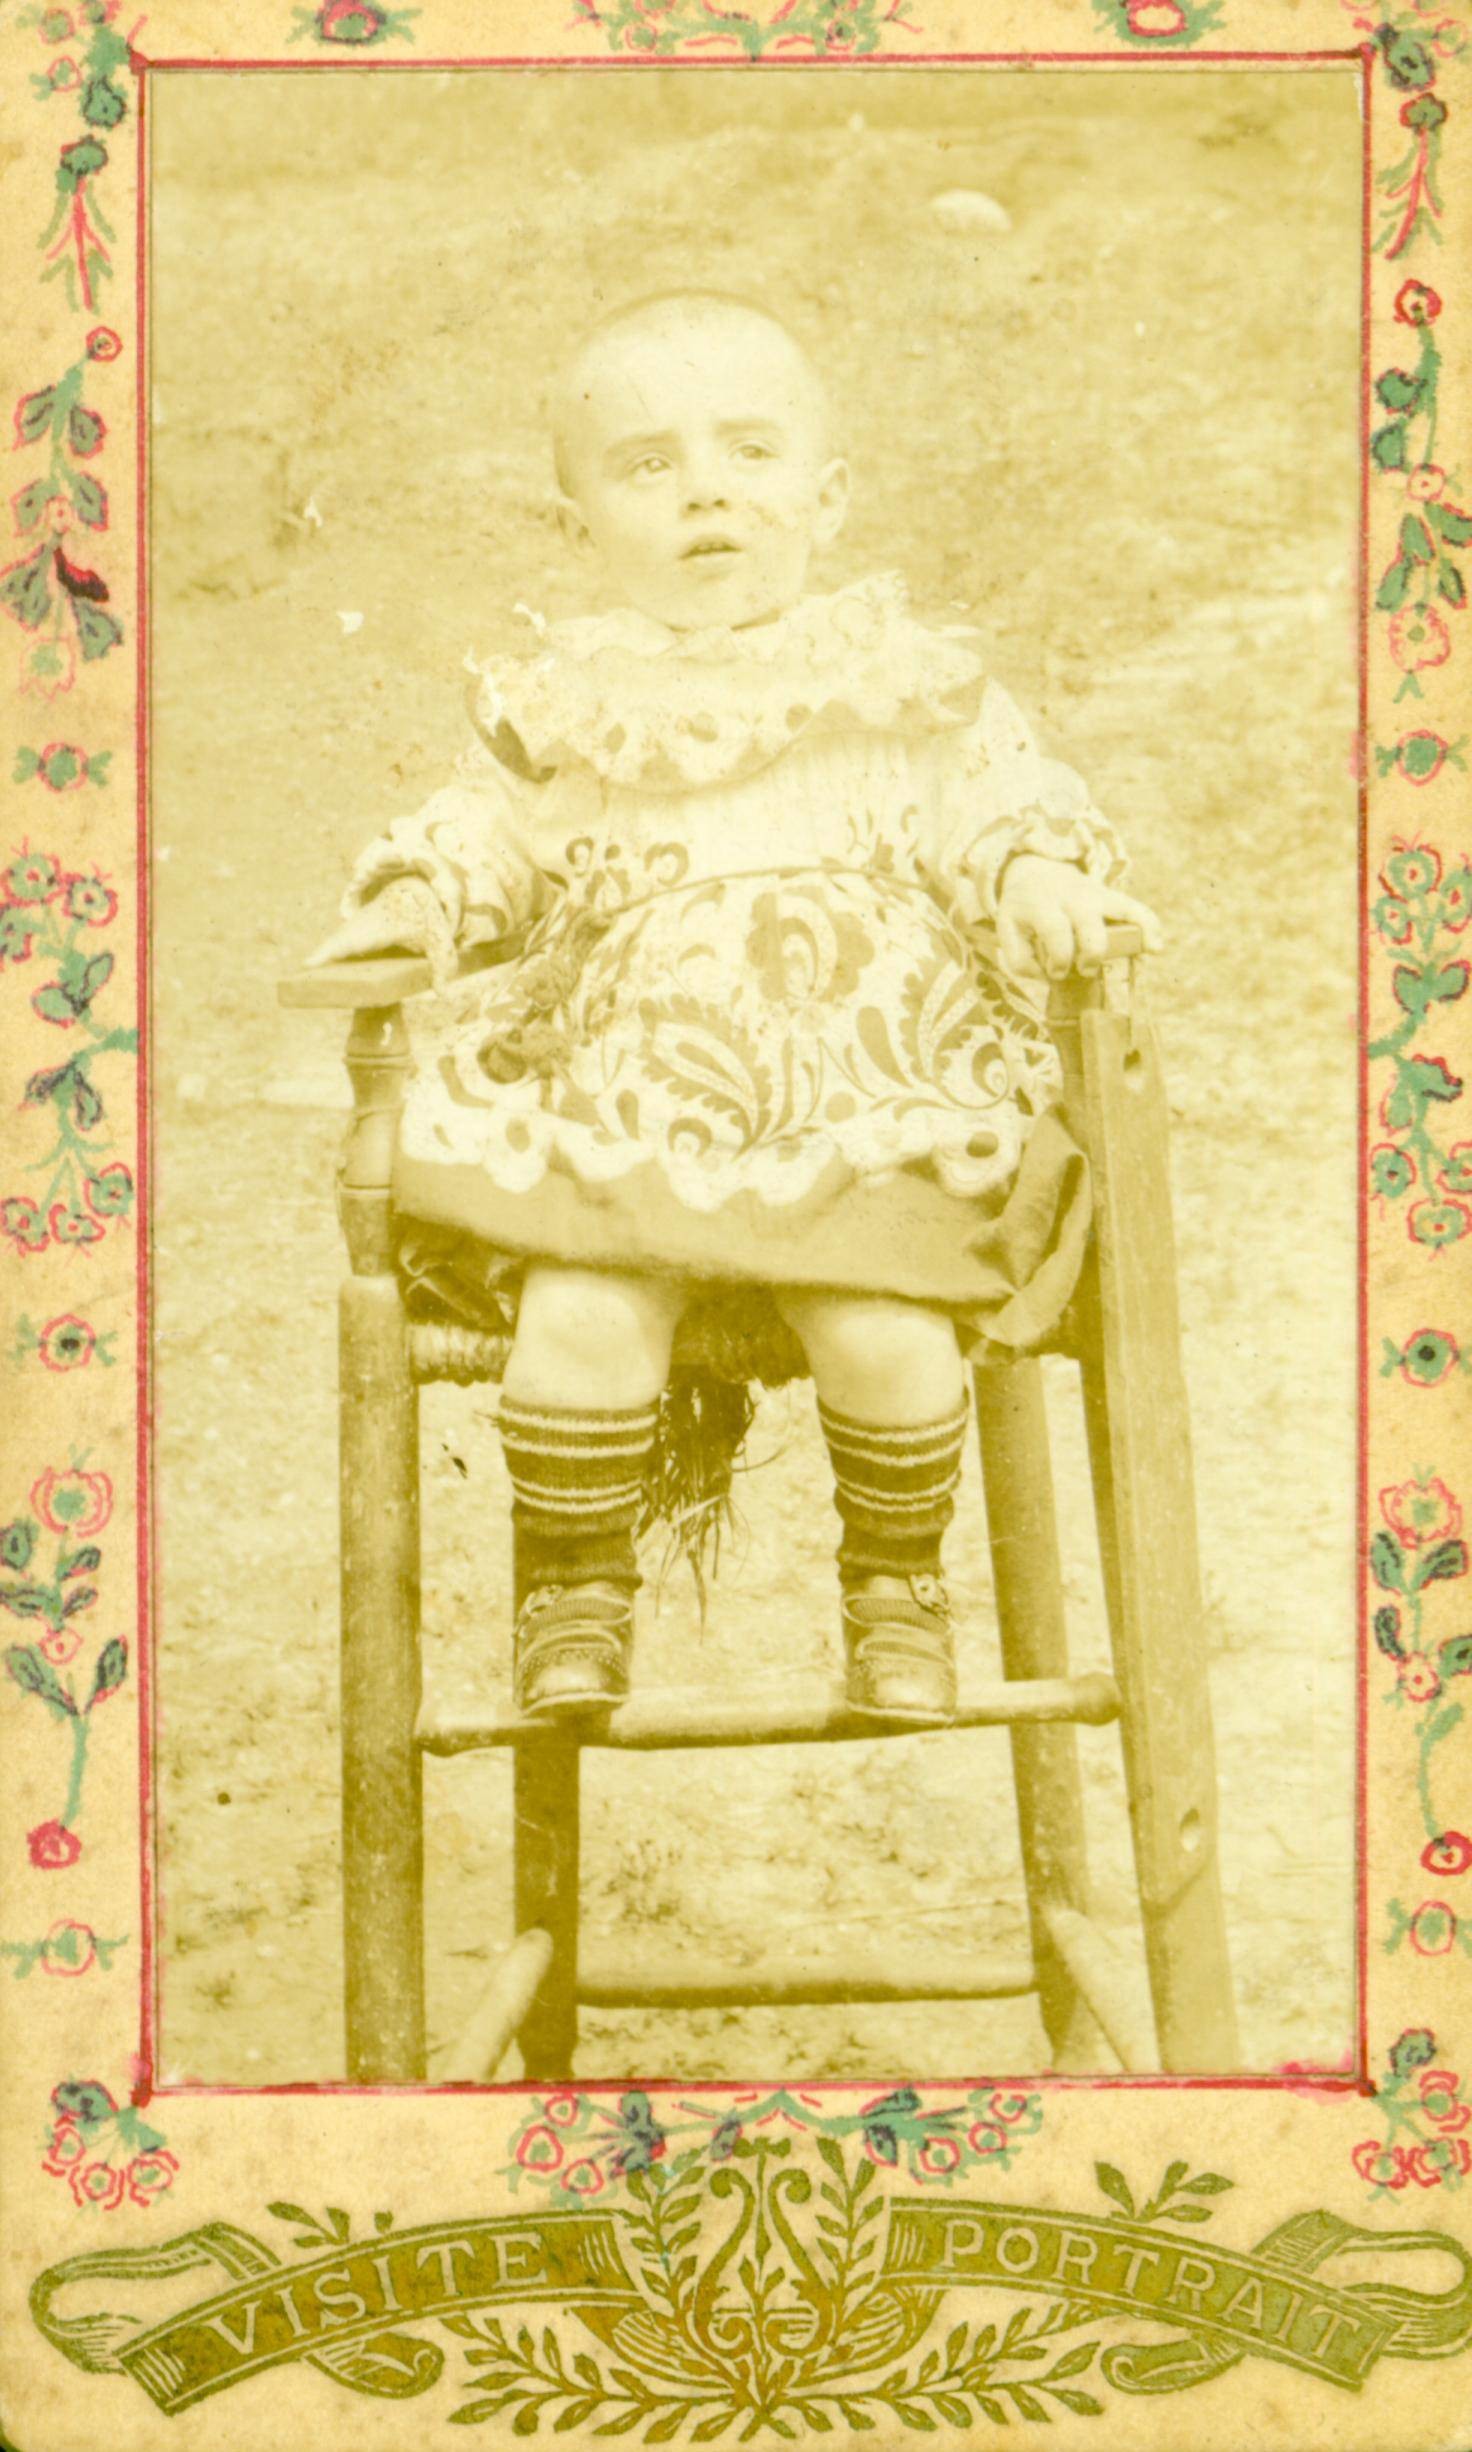 Homokszentgyörgyi kisfiú (Rippl-Rónai Múzeum CC BY-NC-ND)